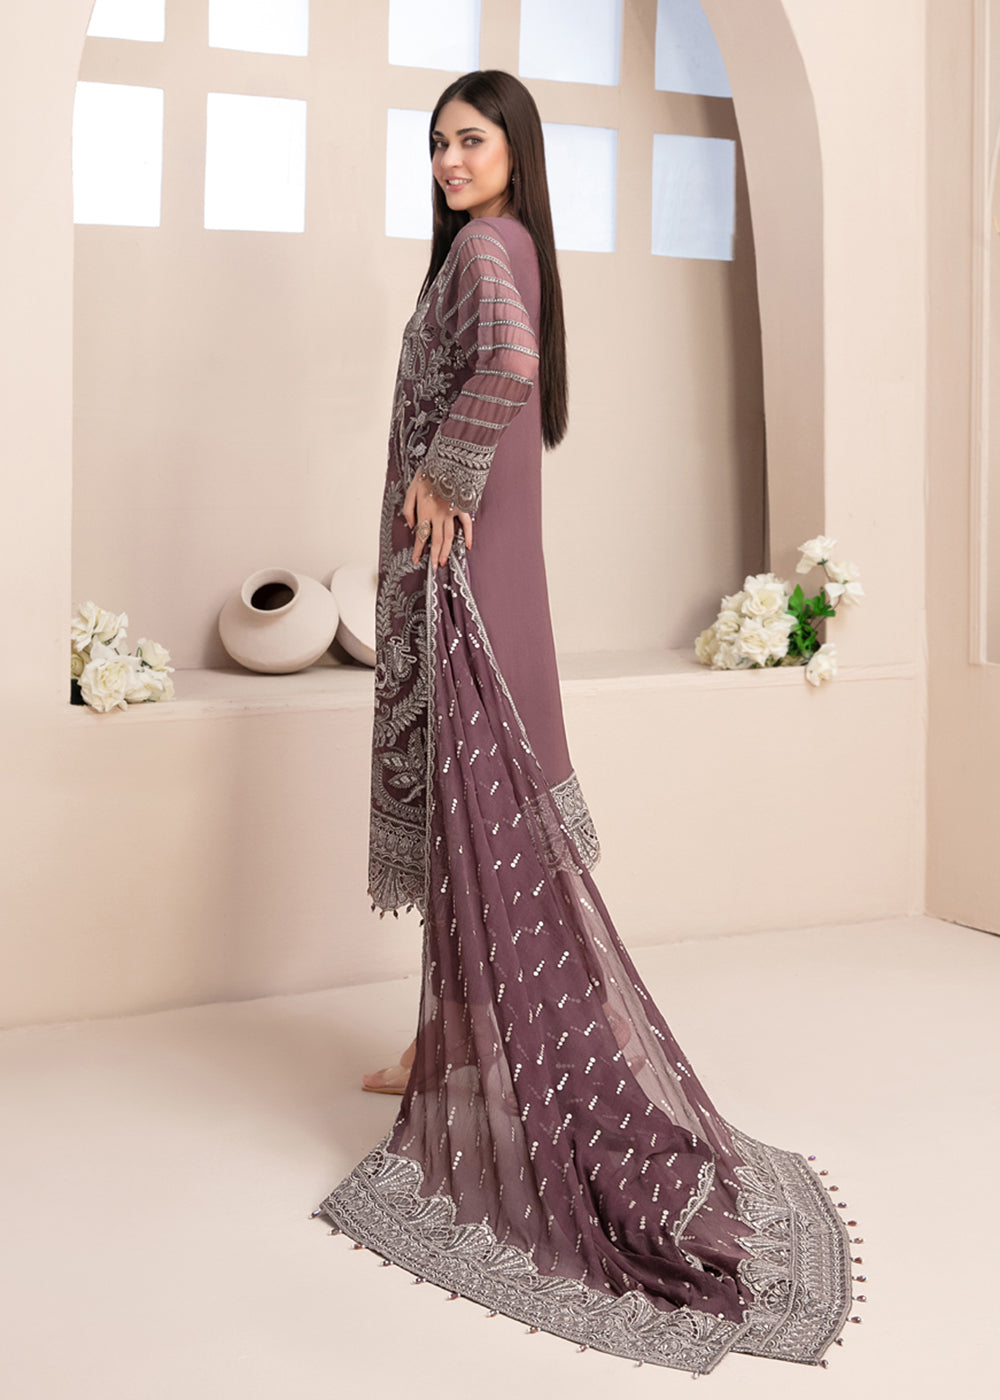 Buy Now Nayara Formal Wear 2023 by Tawakkal Fabrics - D-8679 Online in USA, UK, Canada & Worldwide at Empress Clothing.